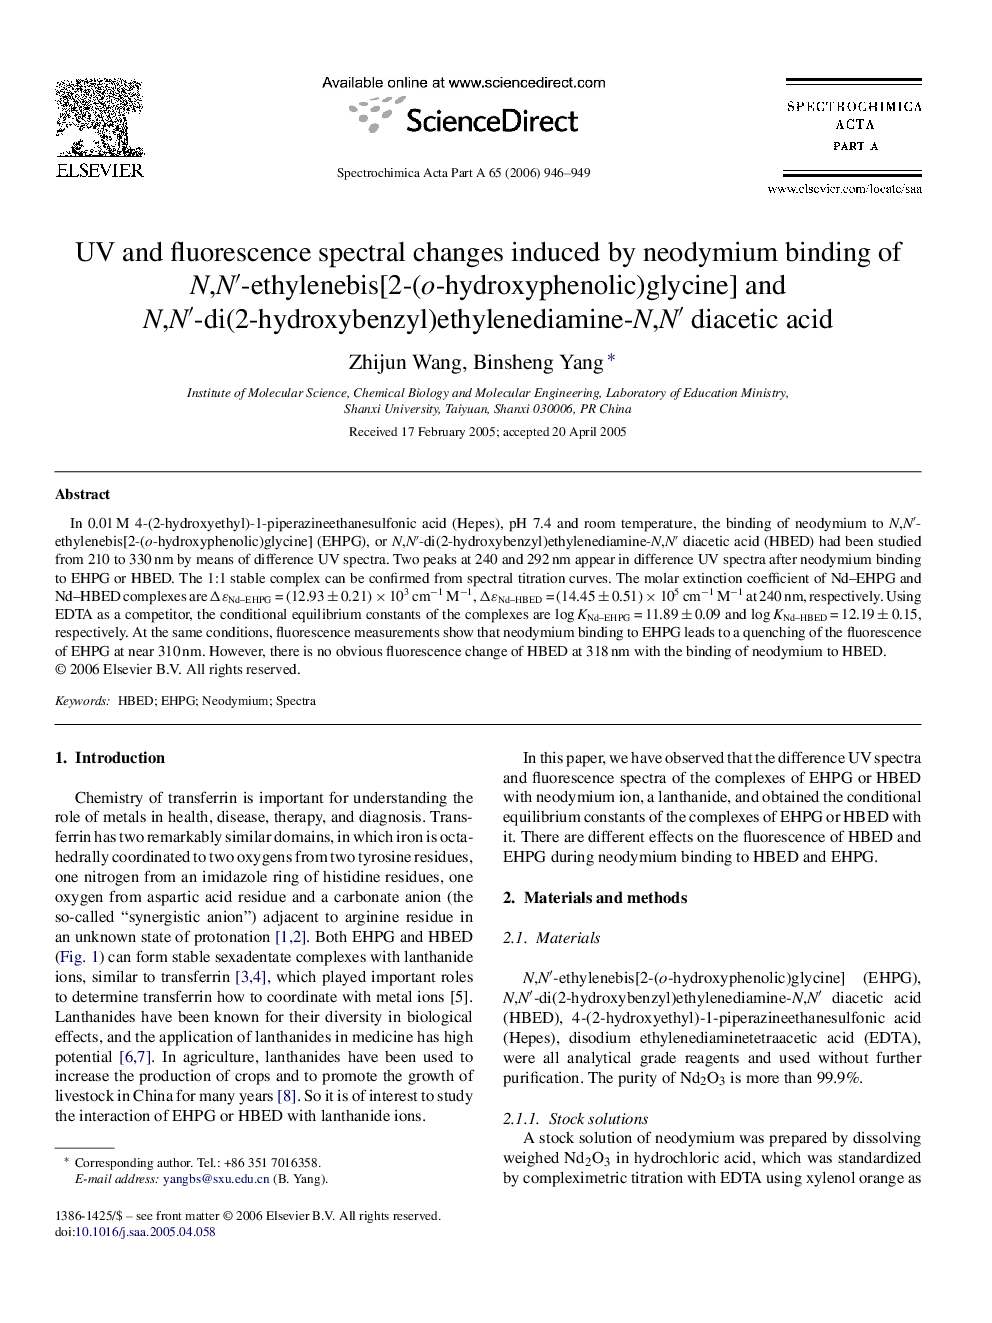 UV and fluorescence spectral changes induced by neodymium binding of N,N′-ethylenebis[2-(o-hydroxyphenolic)glycine] and N,N′-di(2-hydroxybenzyl)ethylenediamine-N,N′ diacetic acid